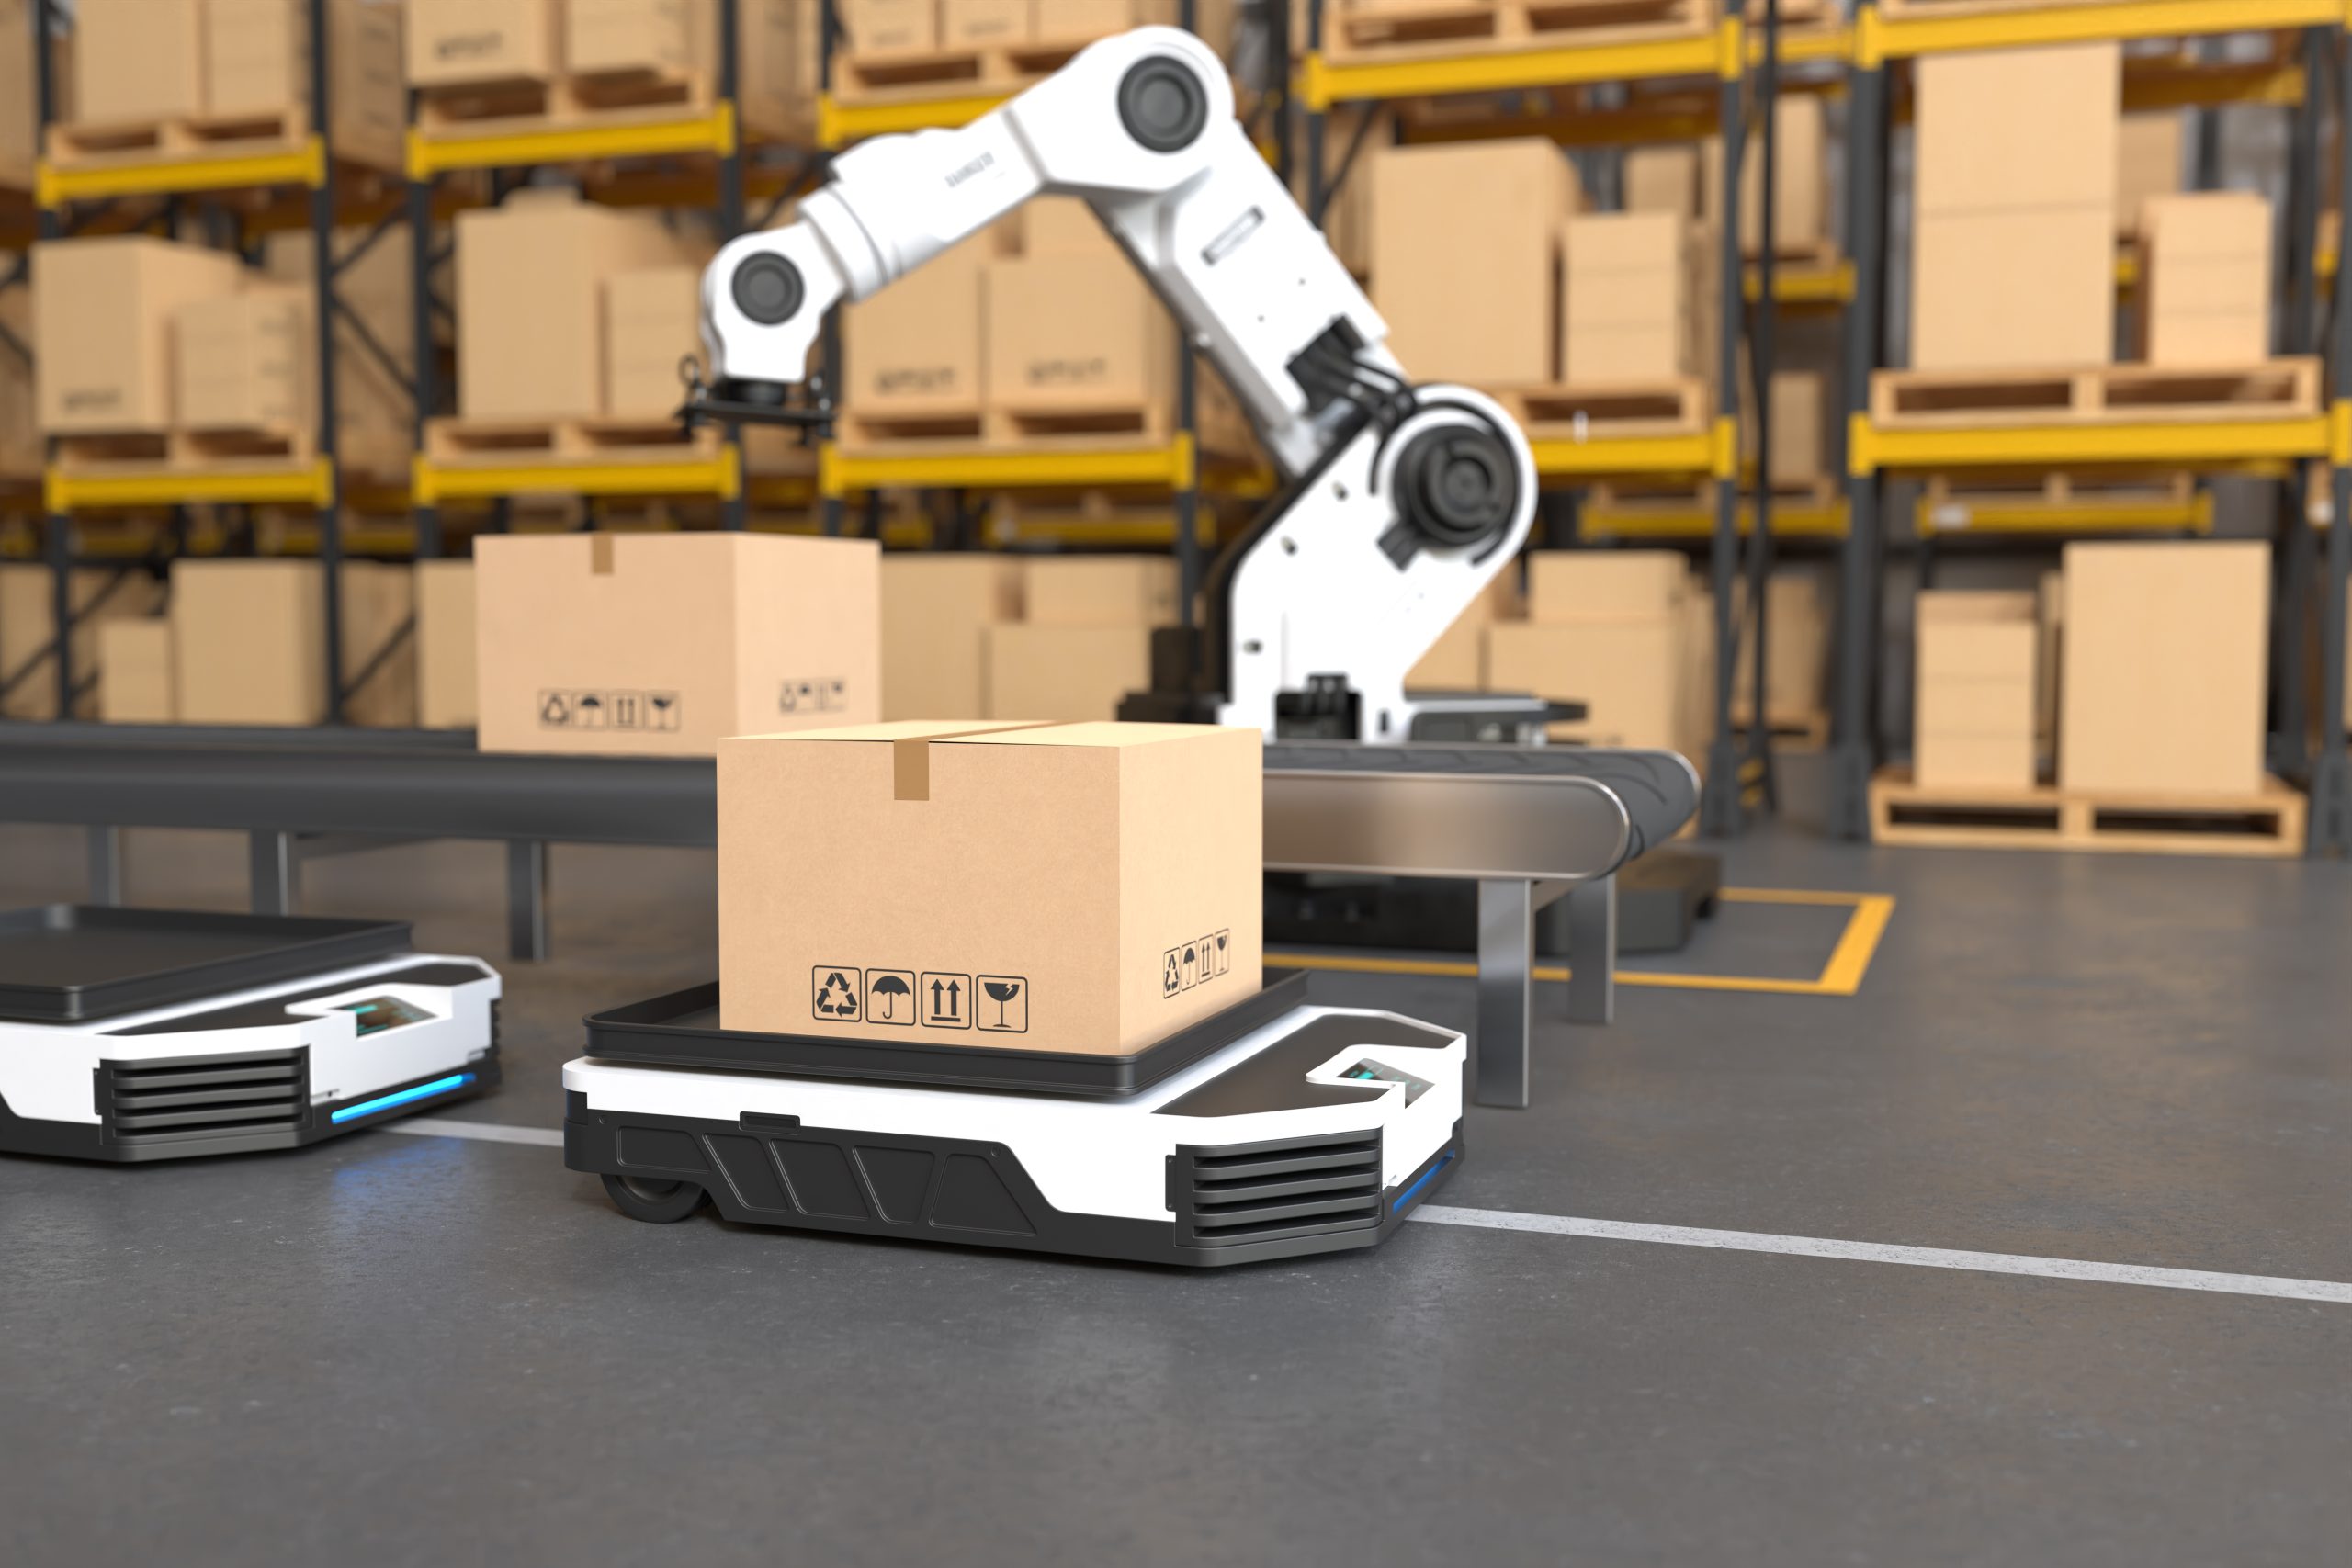 The Robot arm picks up the box to Autonomous Robot transportation in warehouses, Warehouse automation concept. 3D illustration